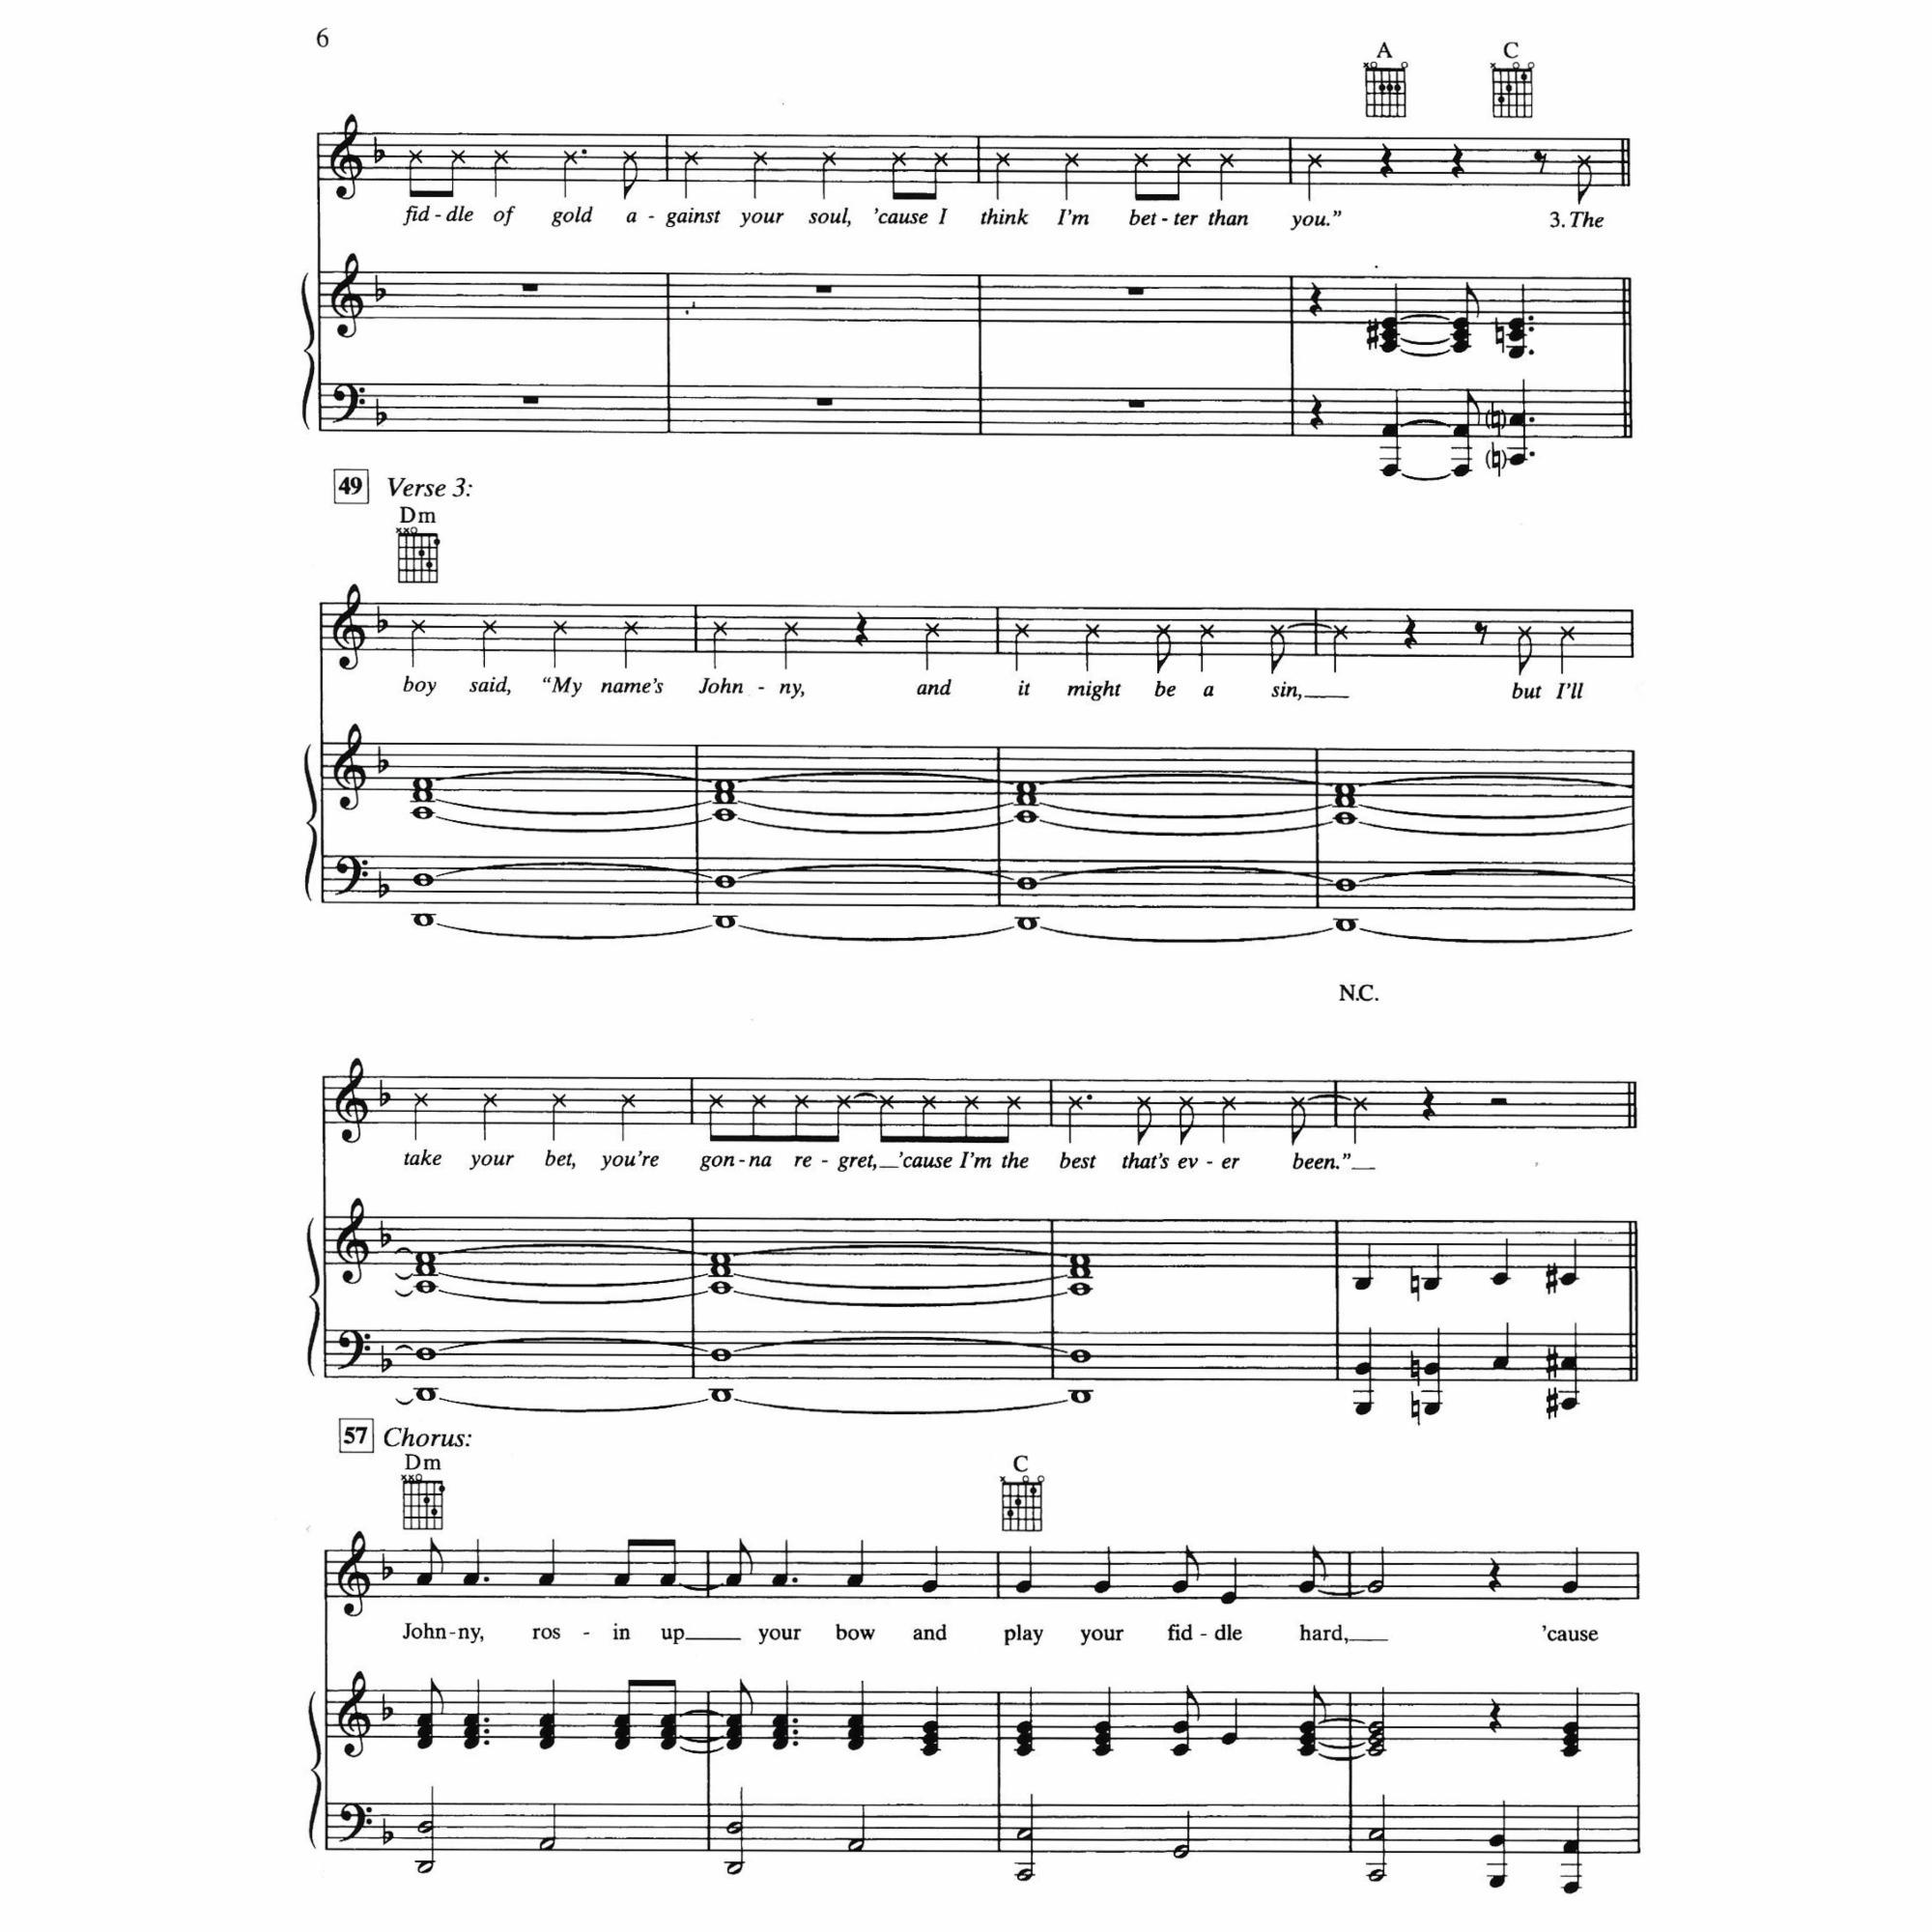 Sample: Piano, Voice, Guitar (Pg. 6)